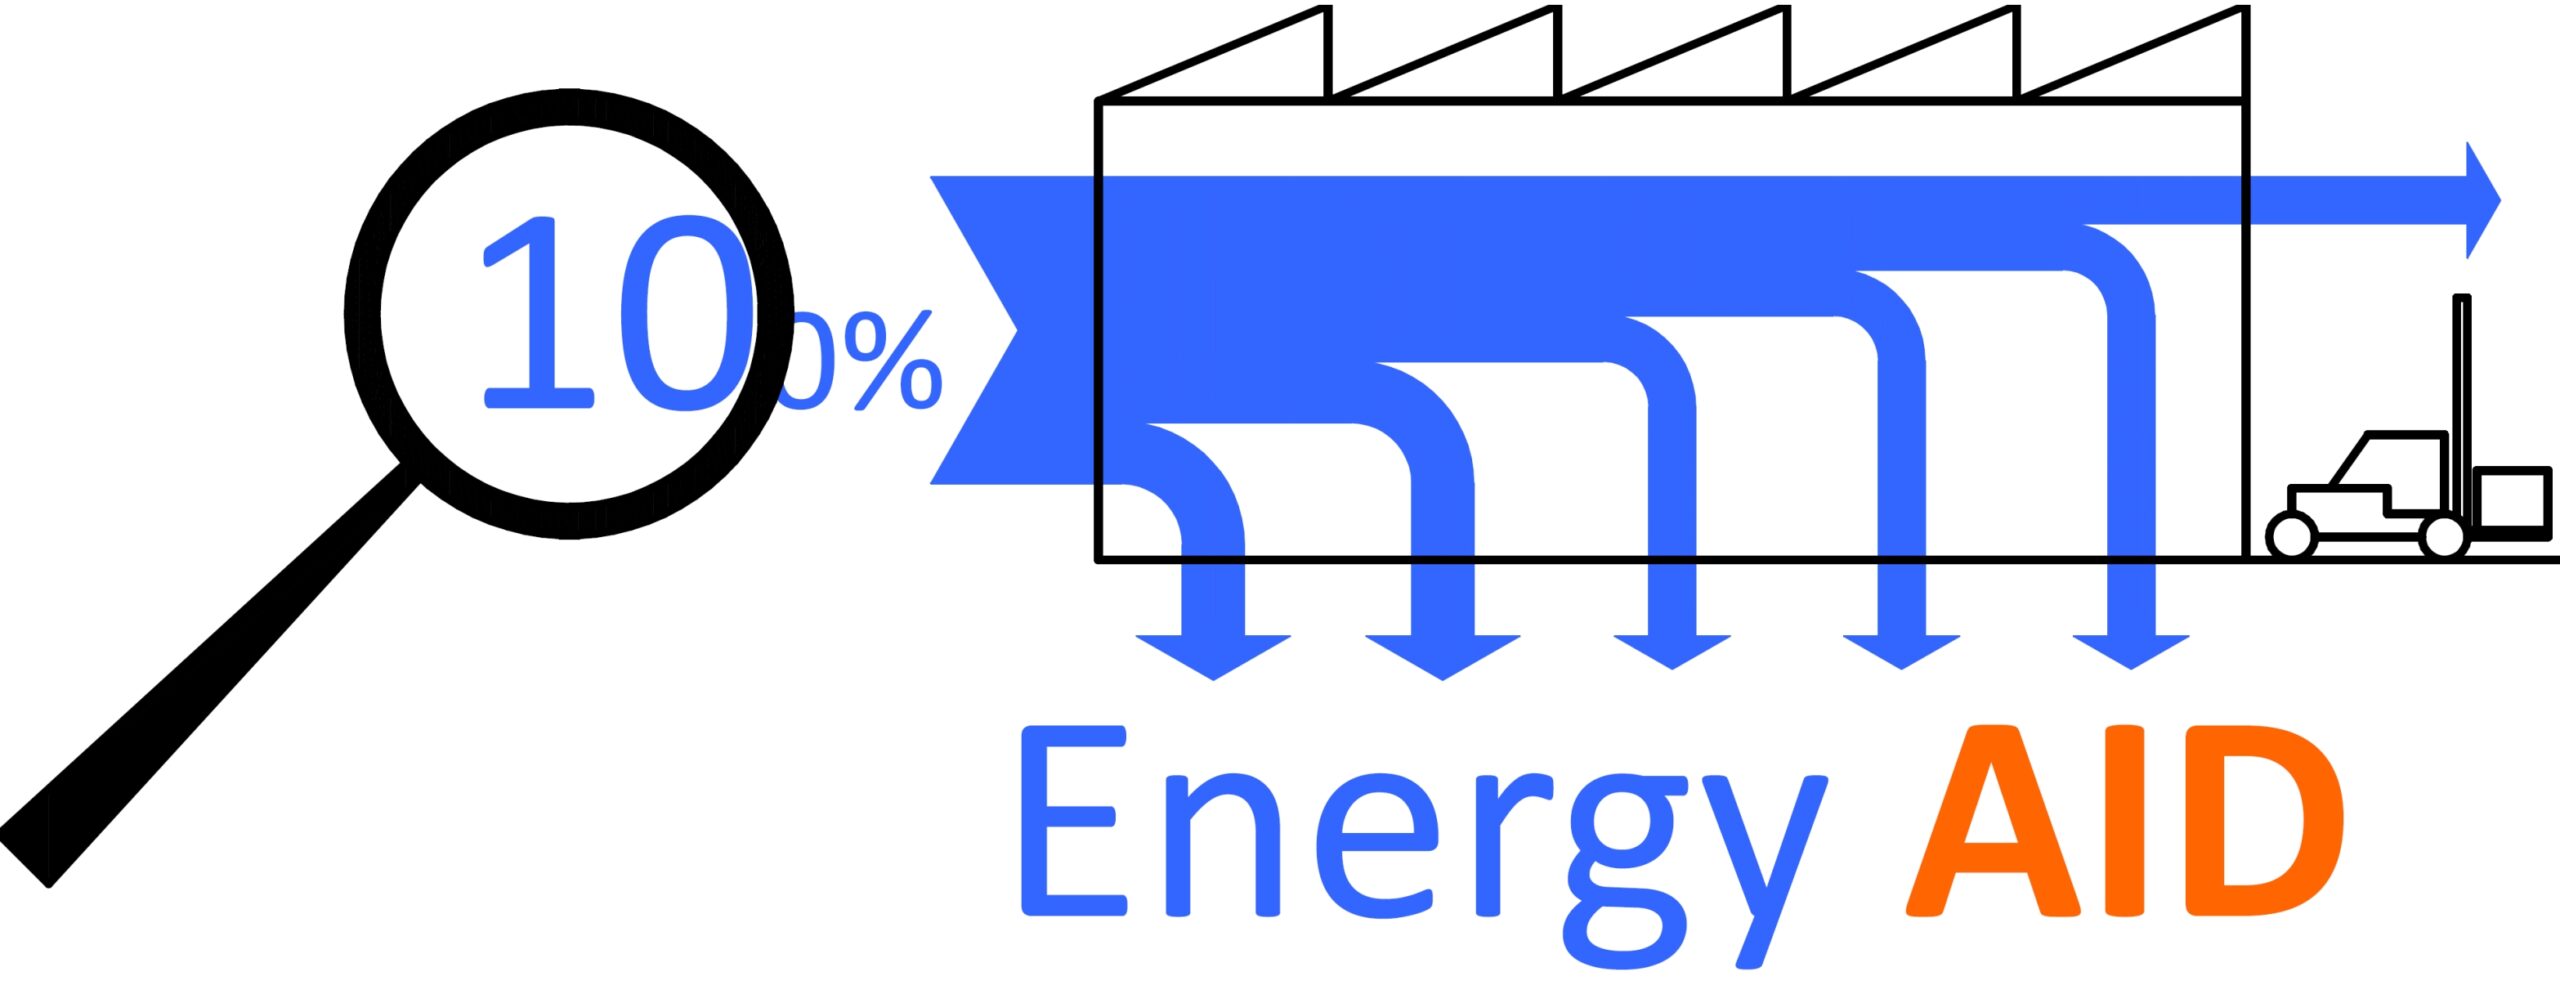 Energy AID Logo